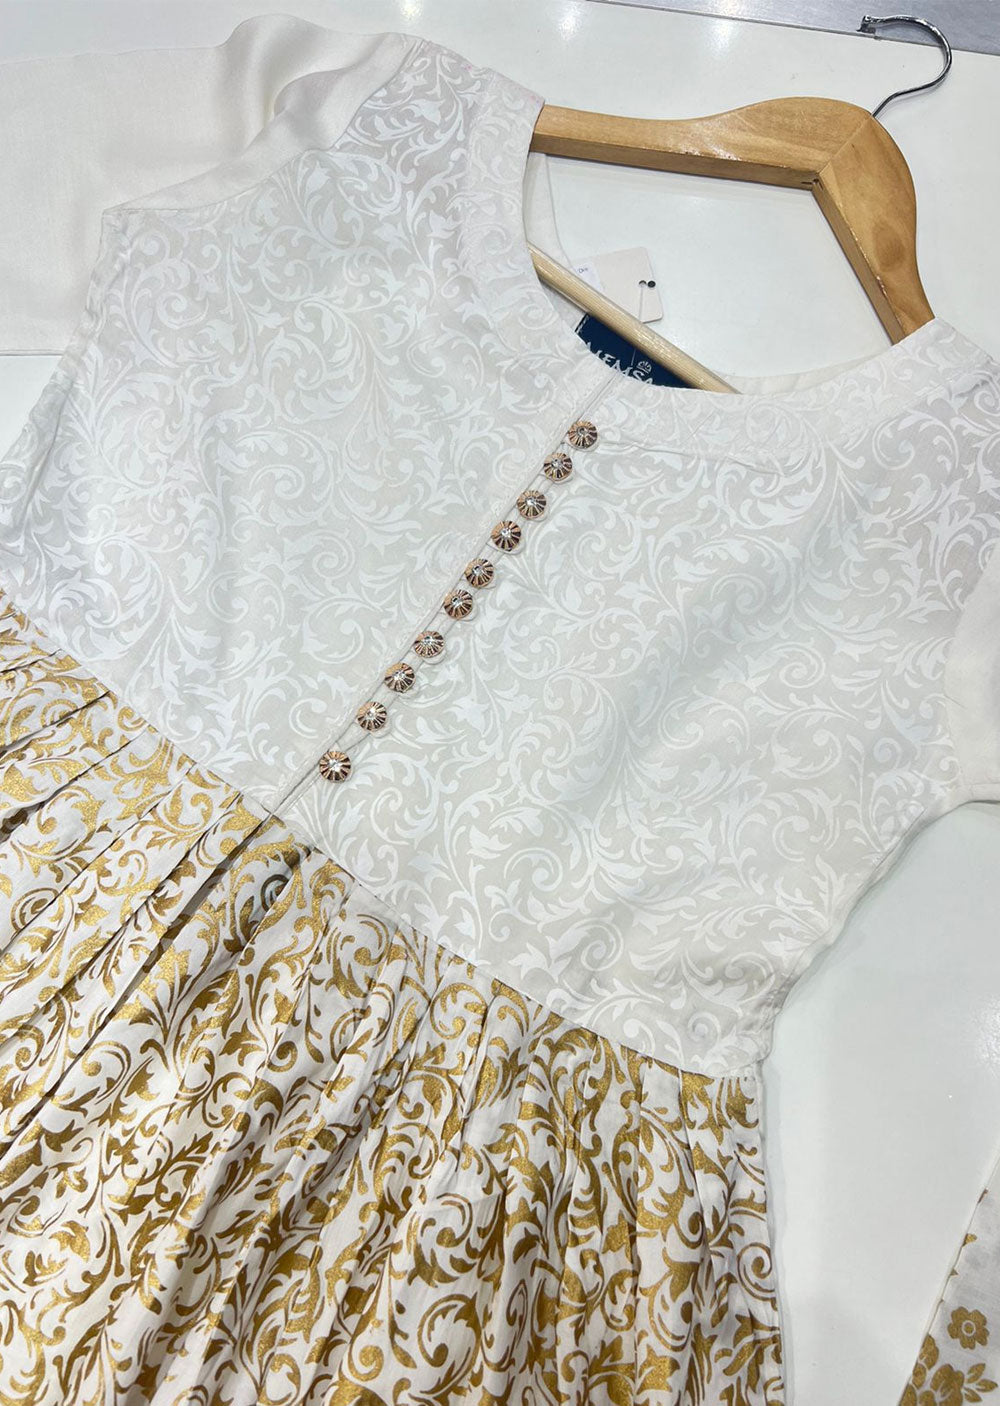 HK88 Venus White Readymade Dress - Memsaab Online